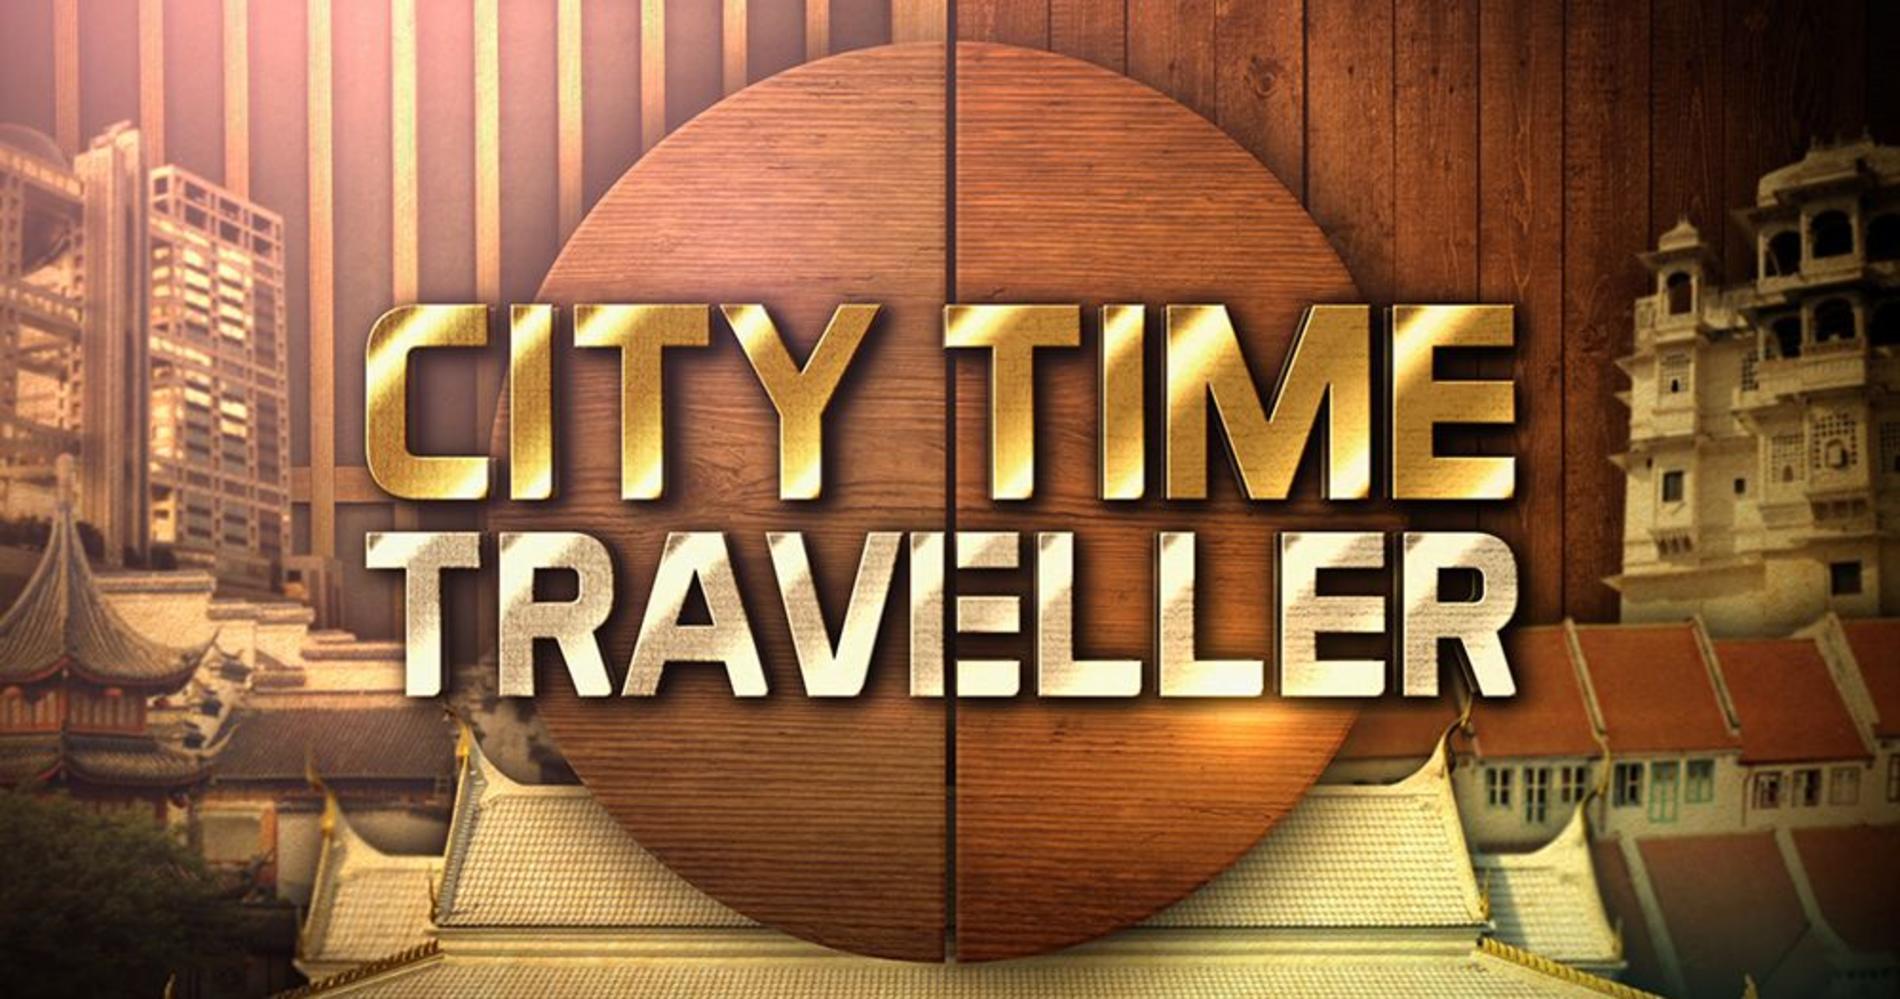 city time traveller